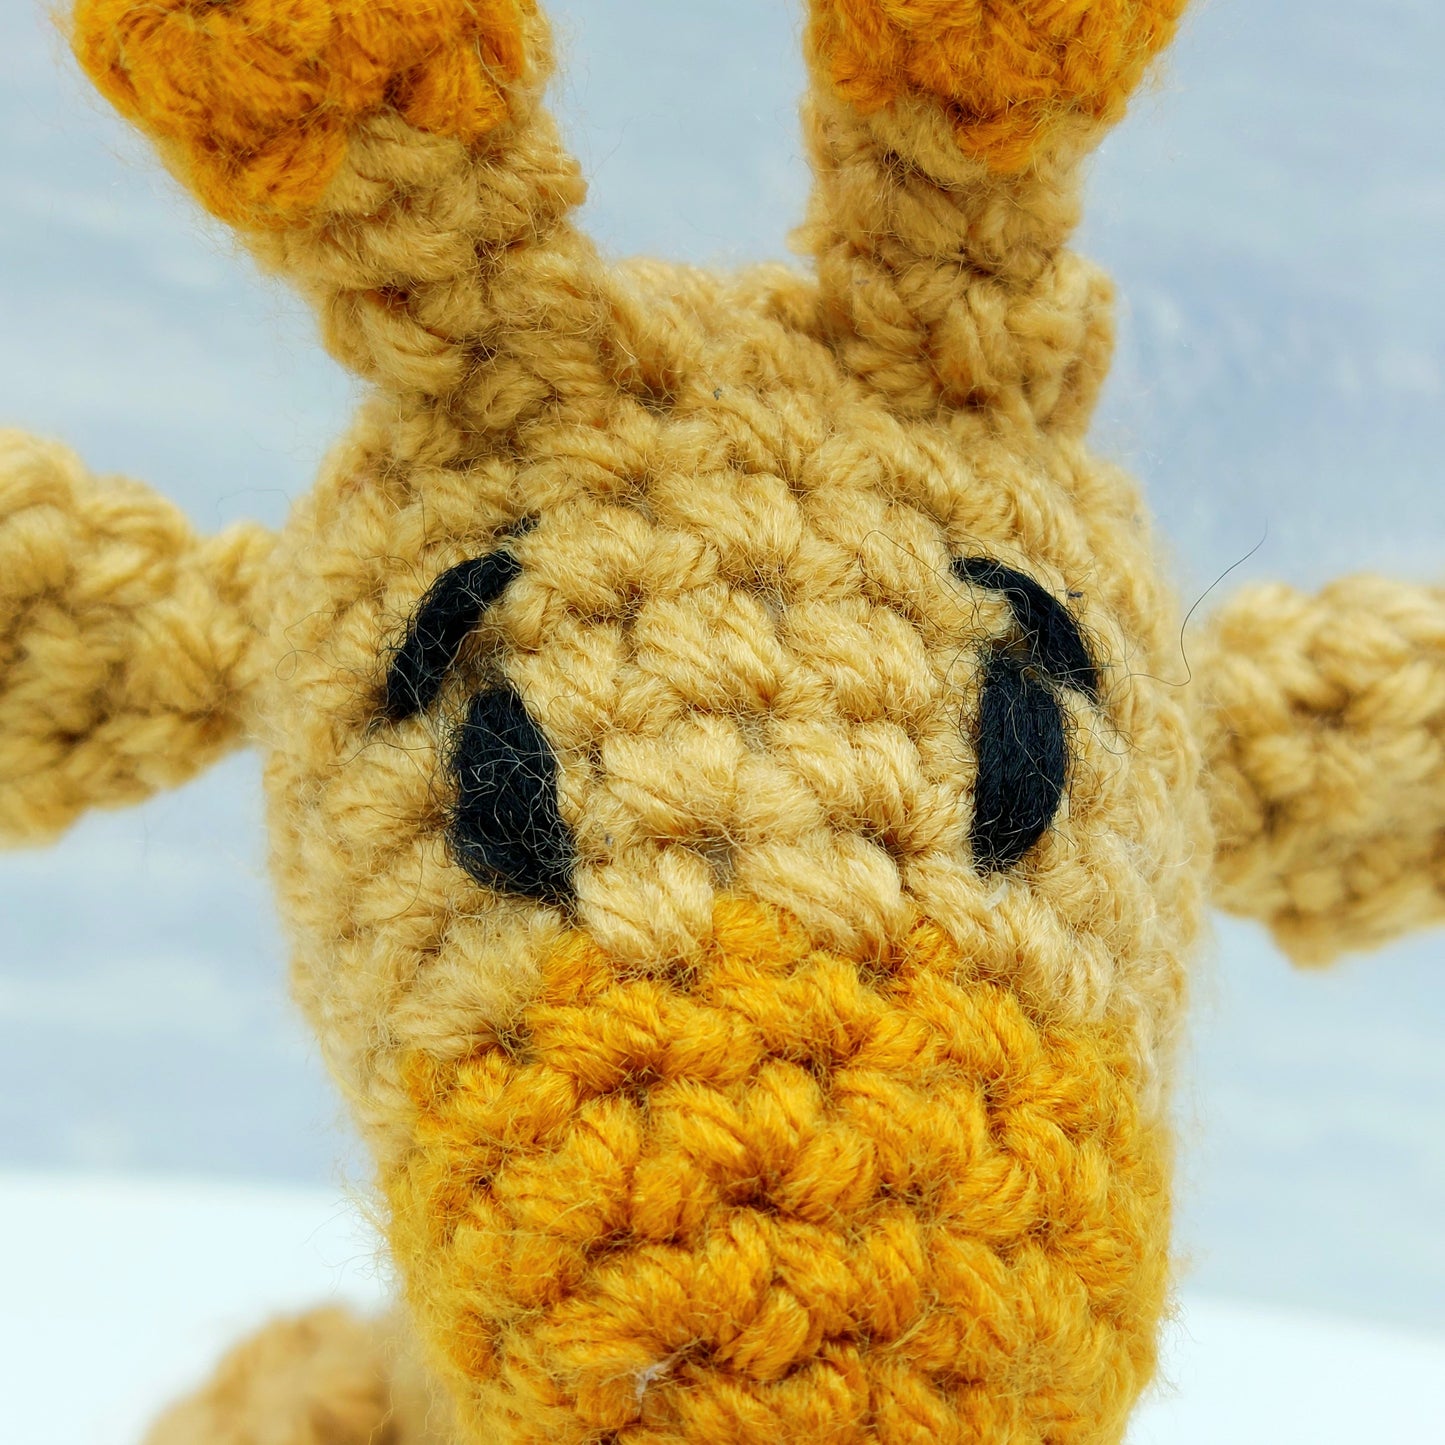 PDF Crochet Pattern - Baby Giraffe